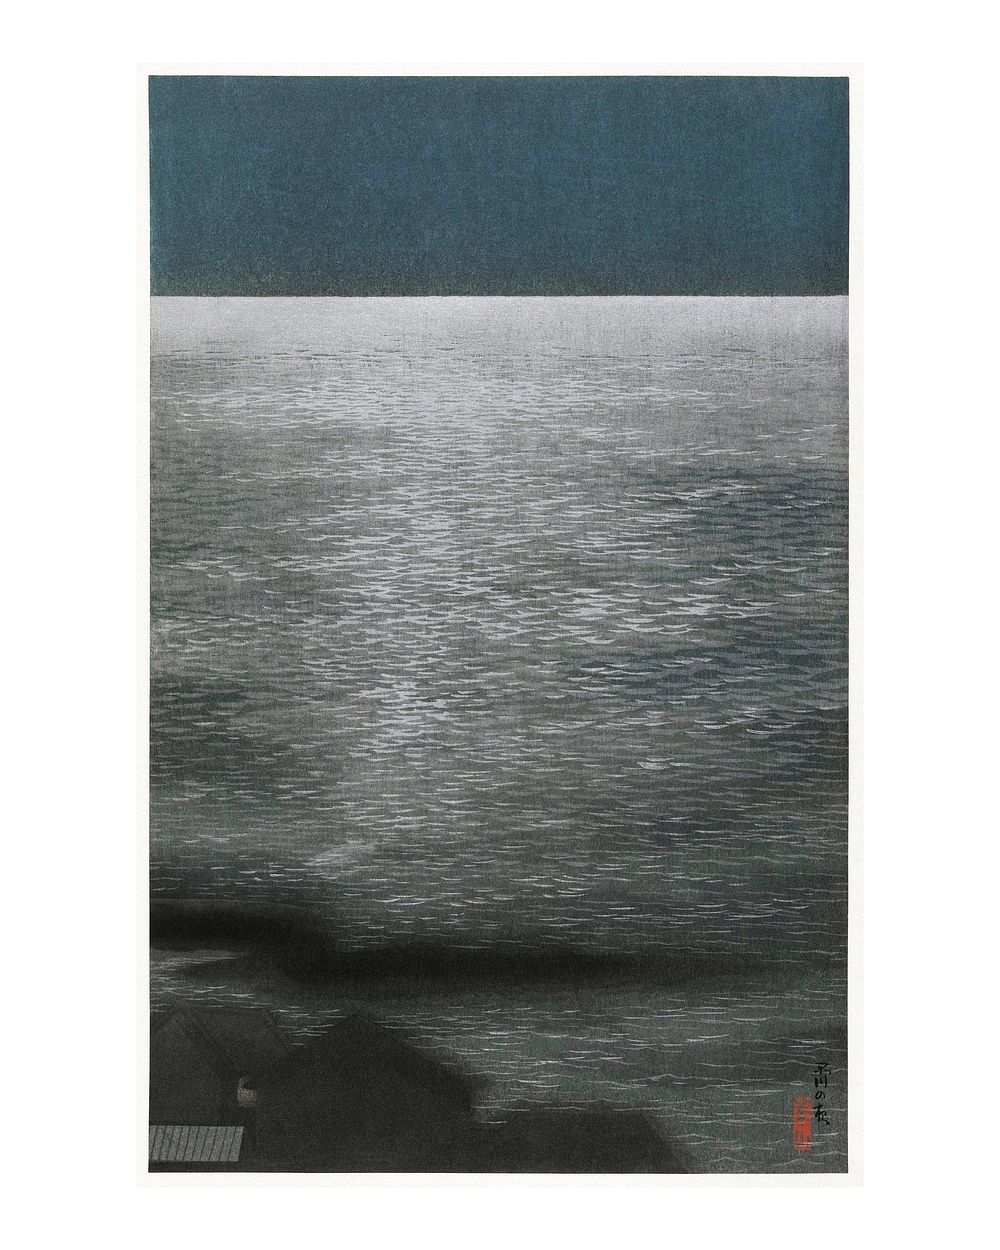 Sea wave at night in Shinagawa vintage illustration wall art print and poster design remix from original artwork.